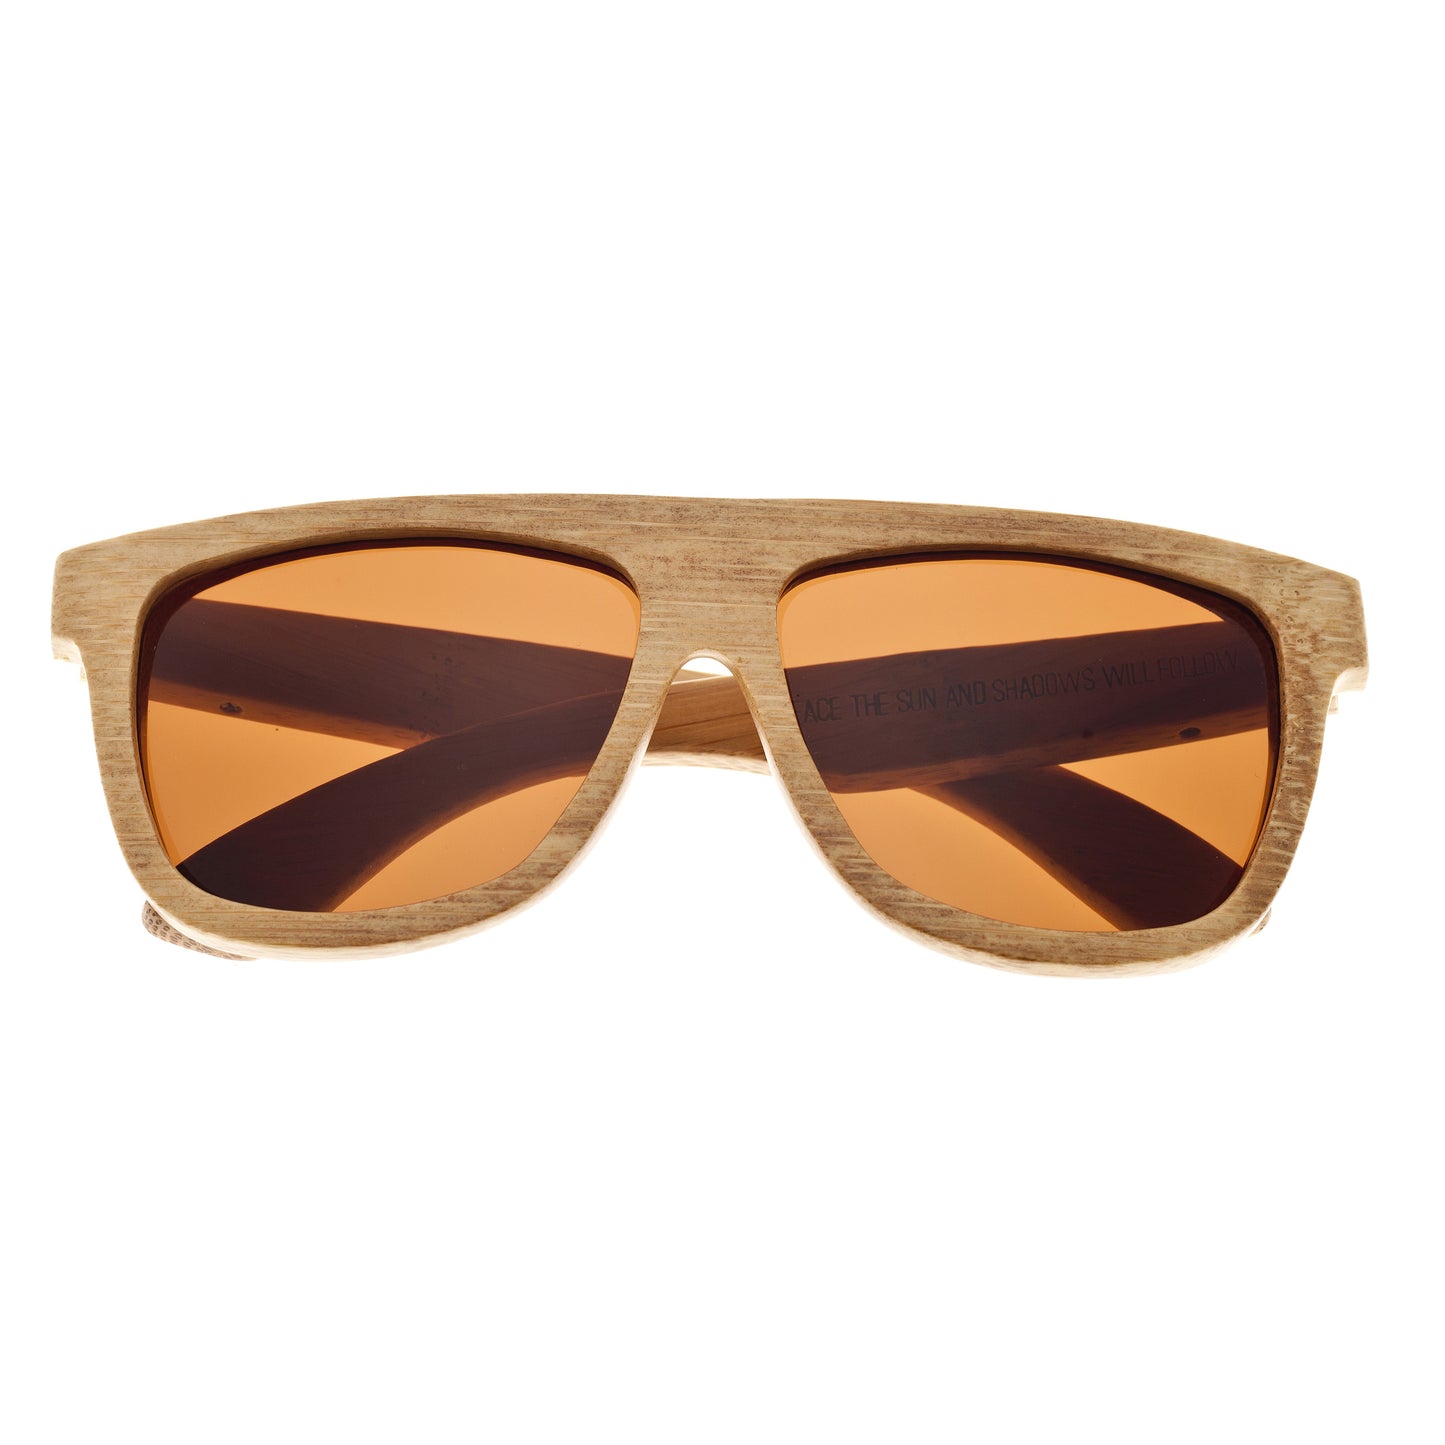 Earth Wood Imperial Polarized Sunglasses - Khaki/Brown - ESG031B